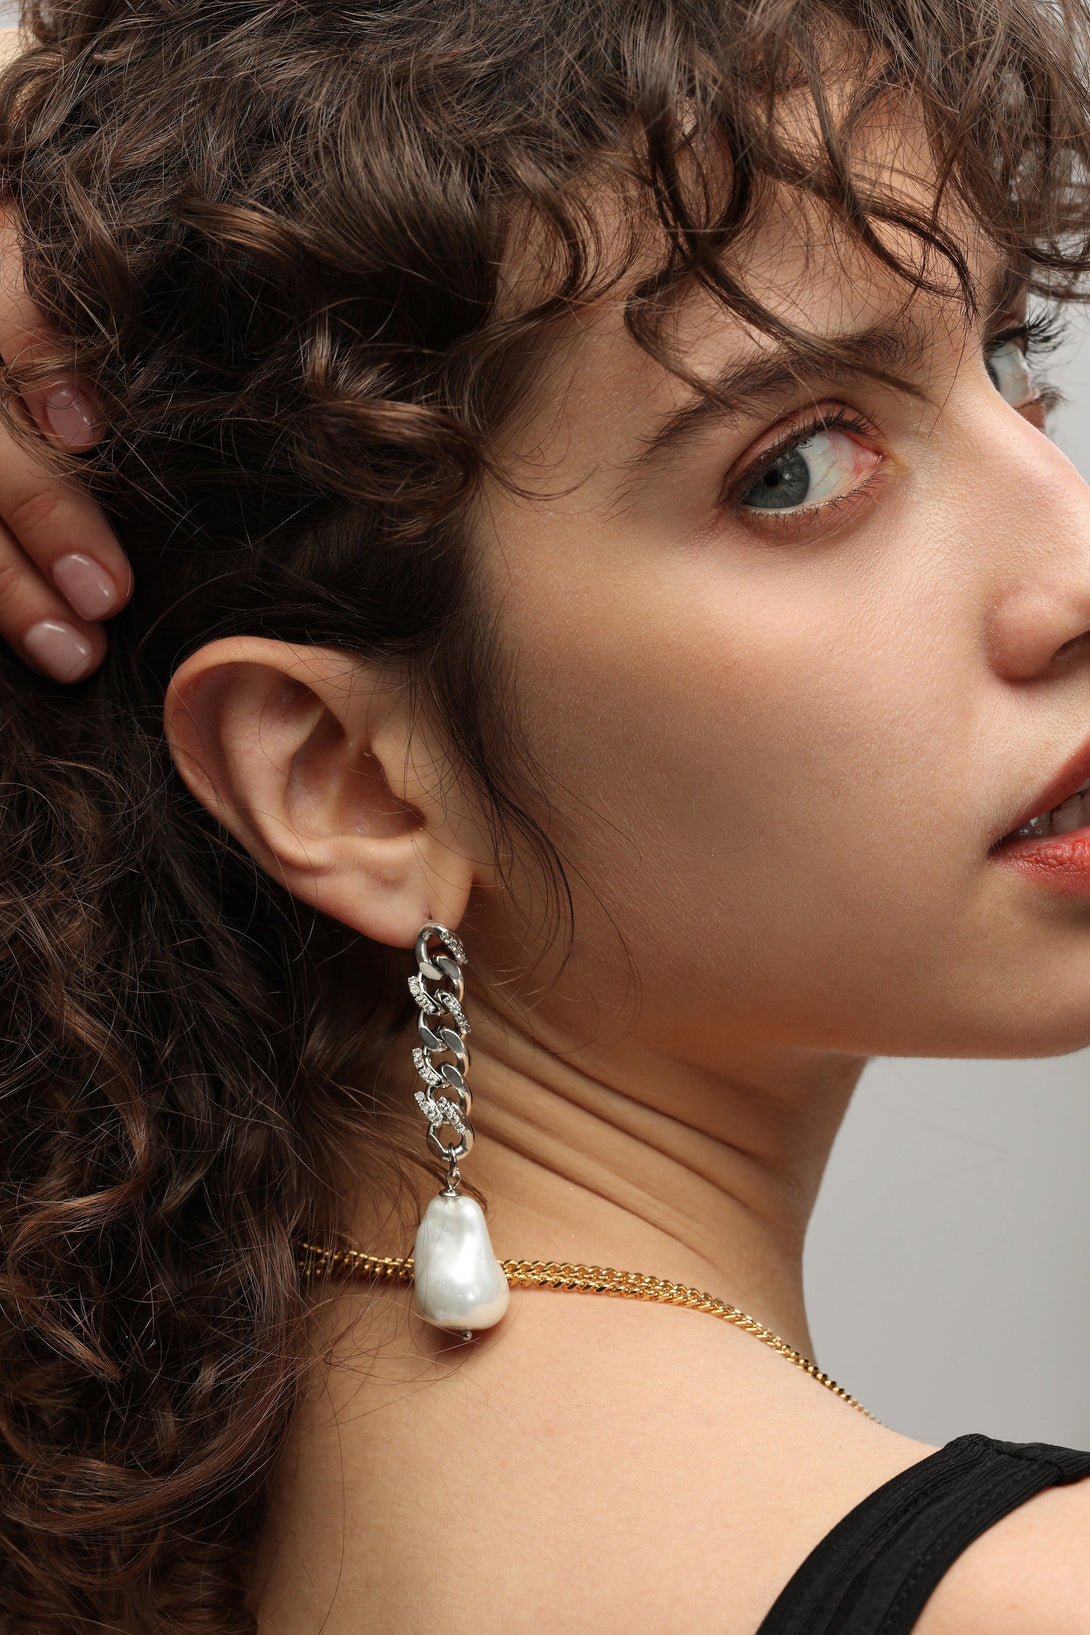 Silver Chain Baroque Pearl Drop Earrings - Classicharms